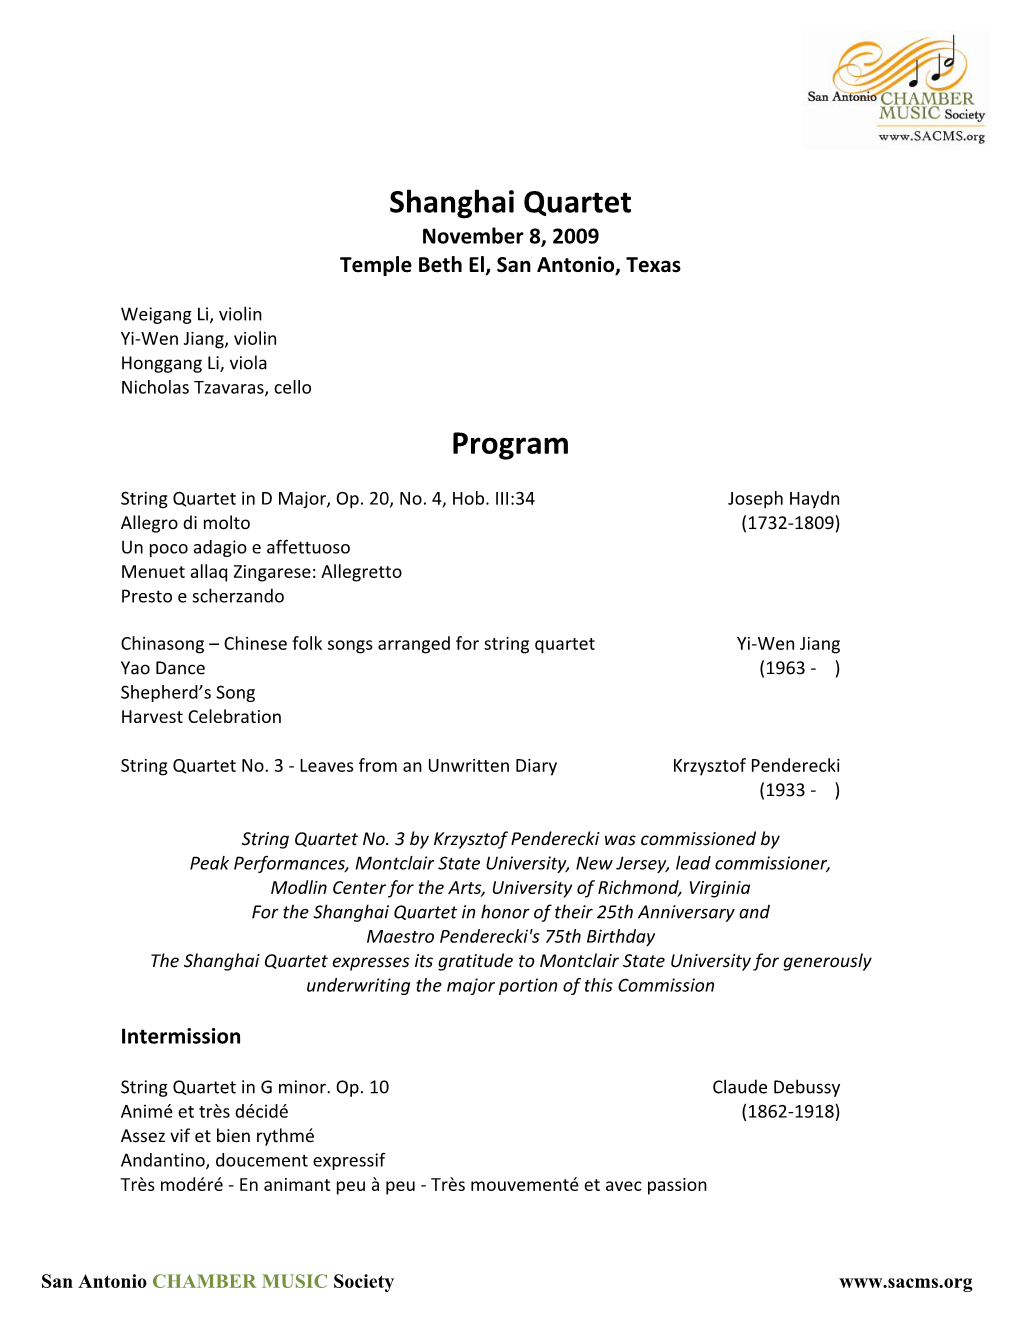 Shanghai Quartet Program